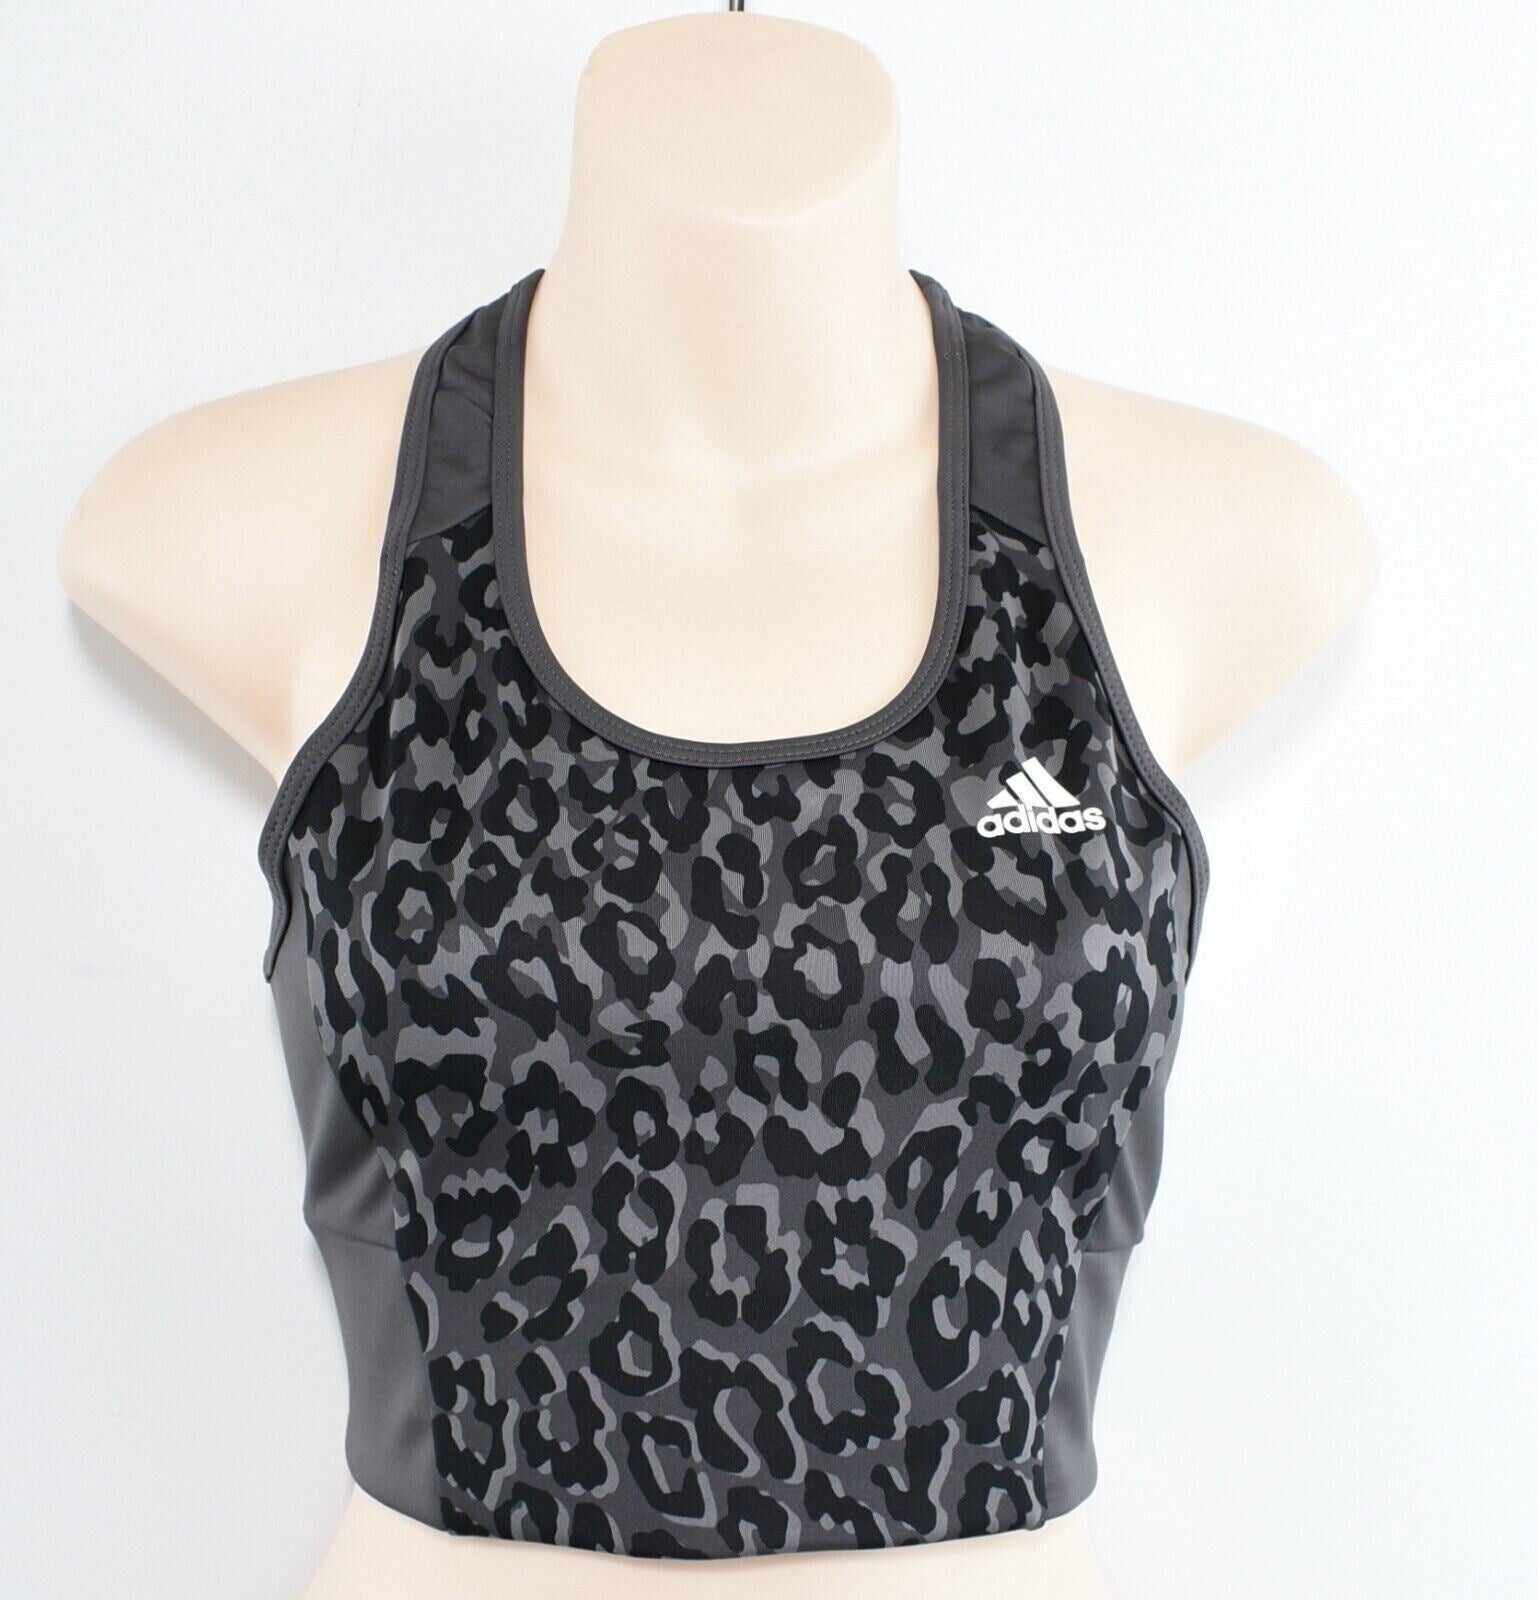 ADIDAS Womens Workout Gym Bra Top, Black/Grey Leopard Print, size M /UK 12-14